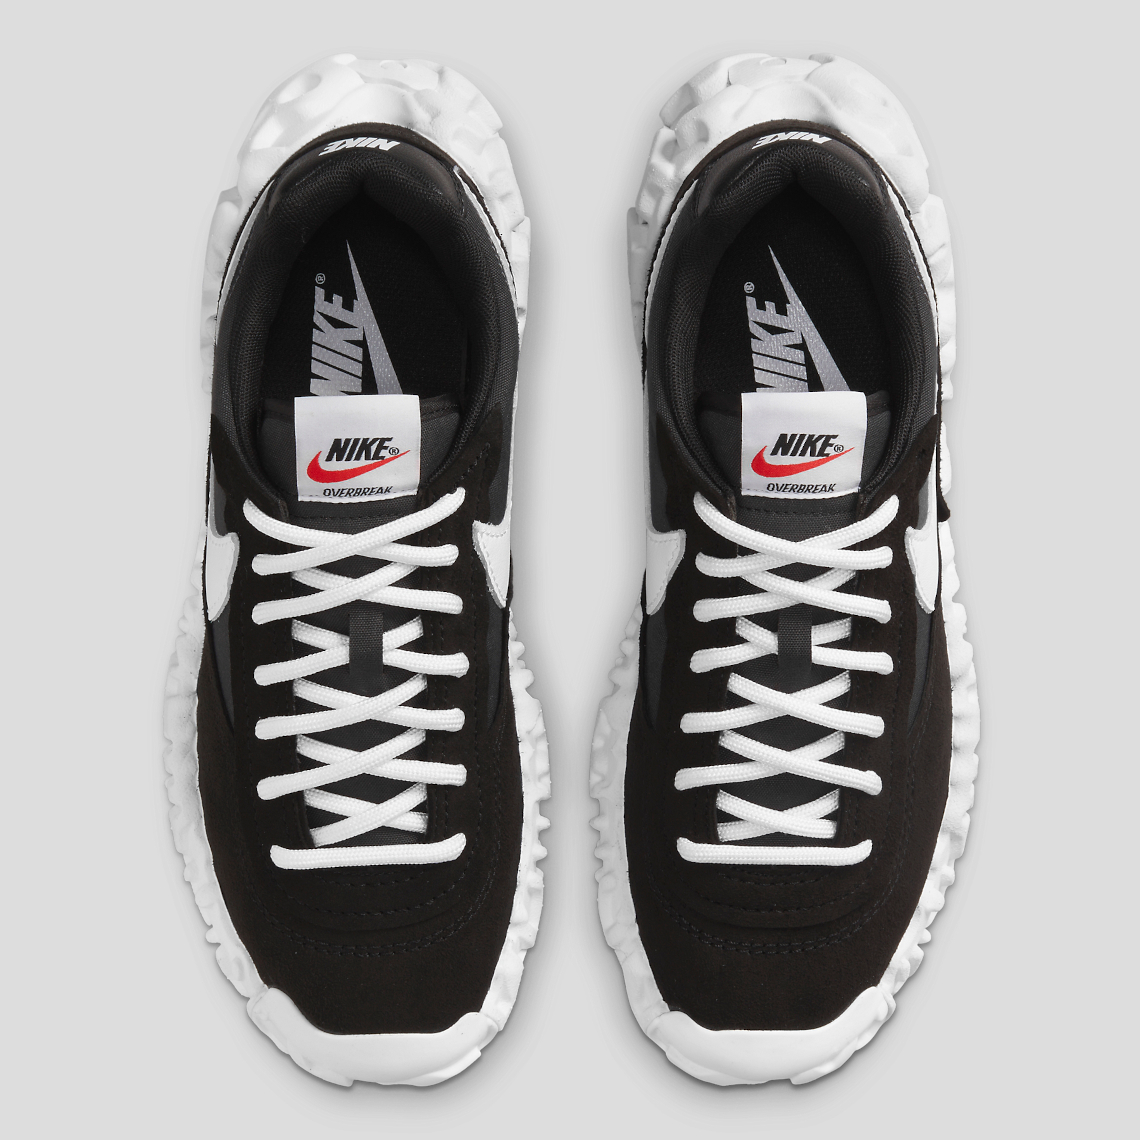 Nike Overbreak Black White Dc3041 002 6